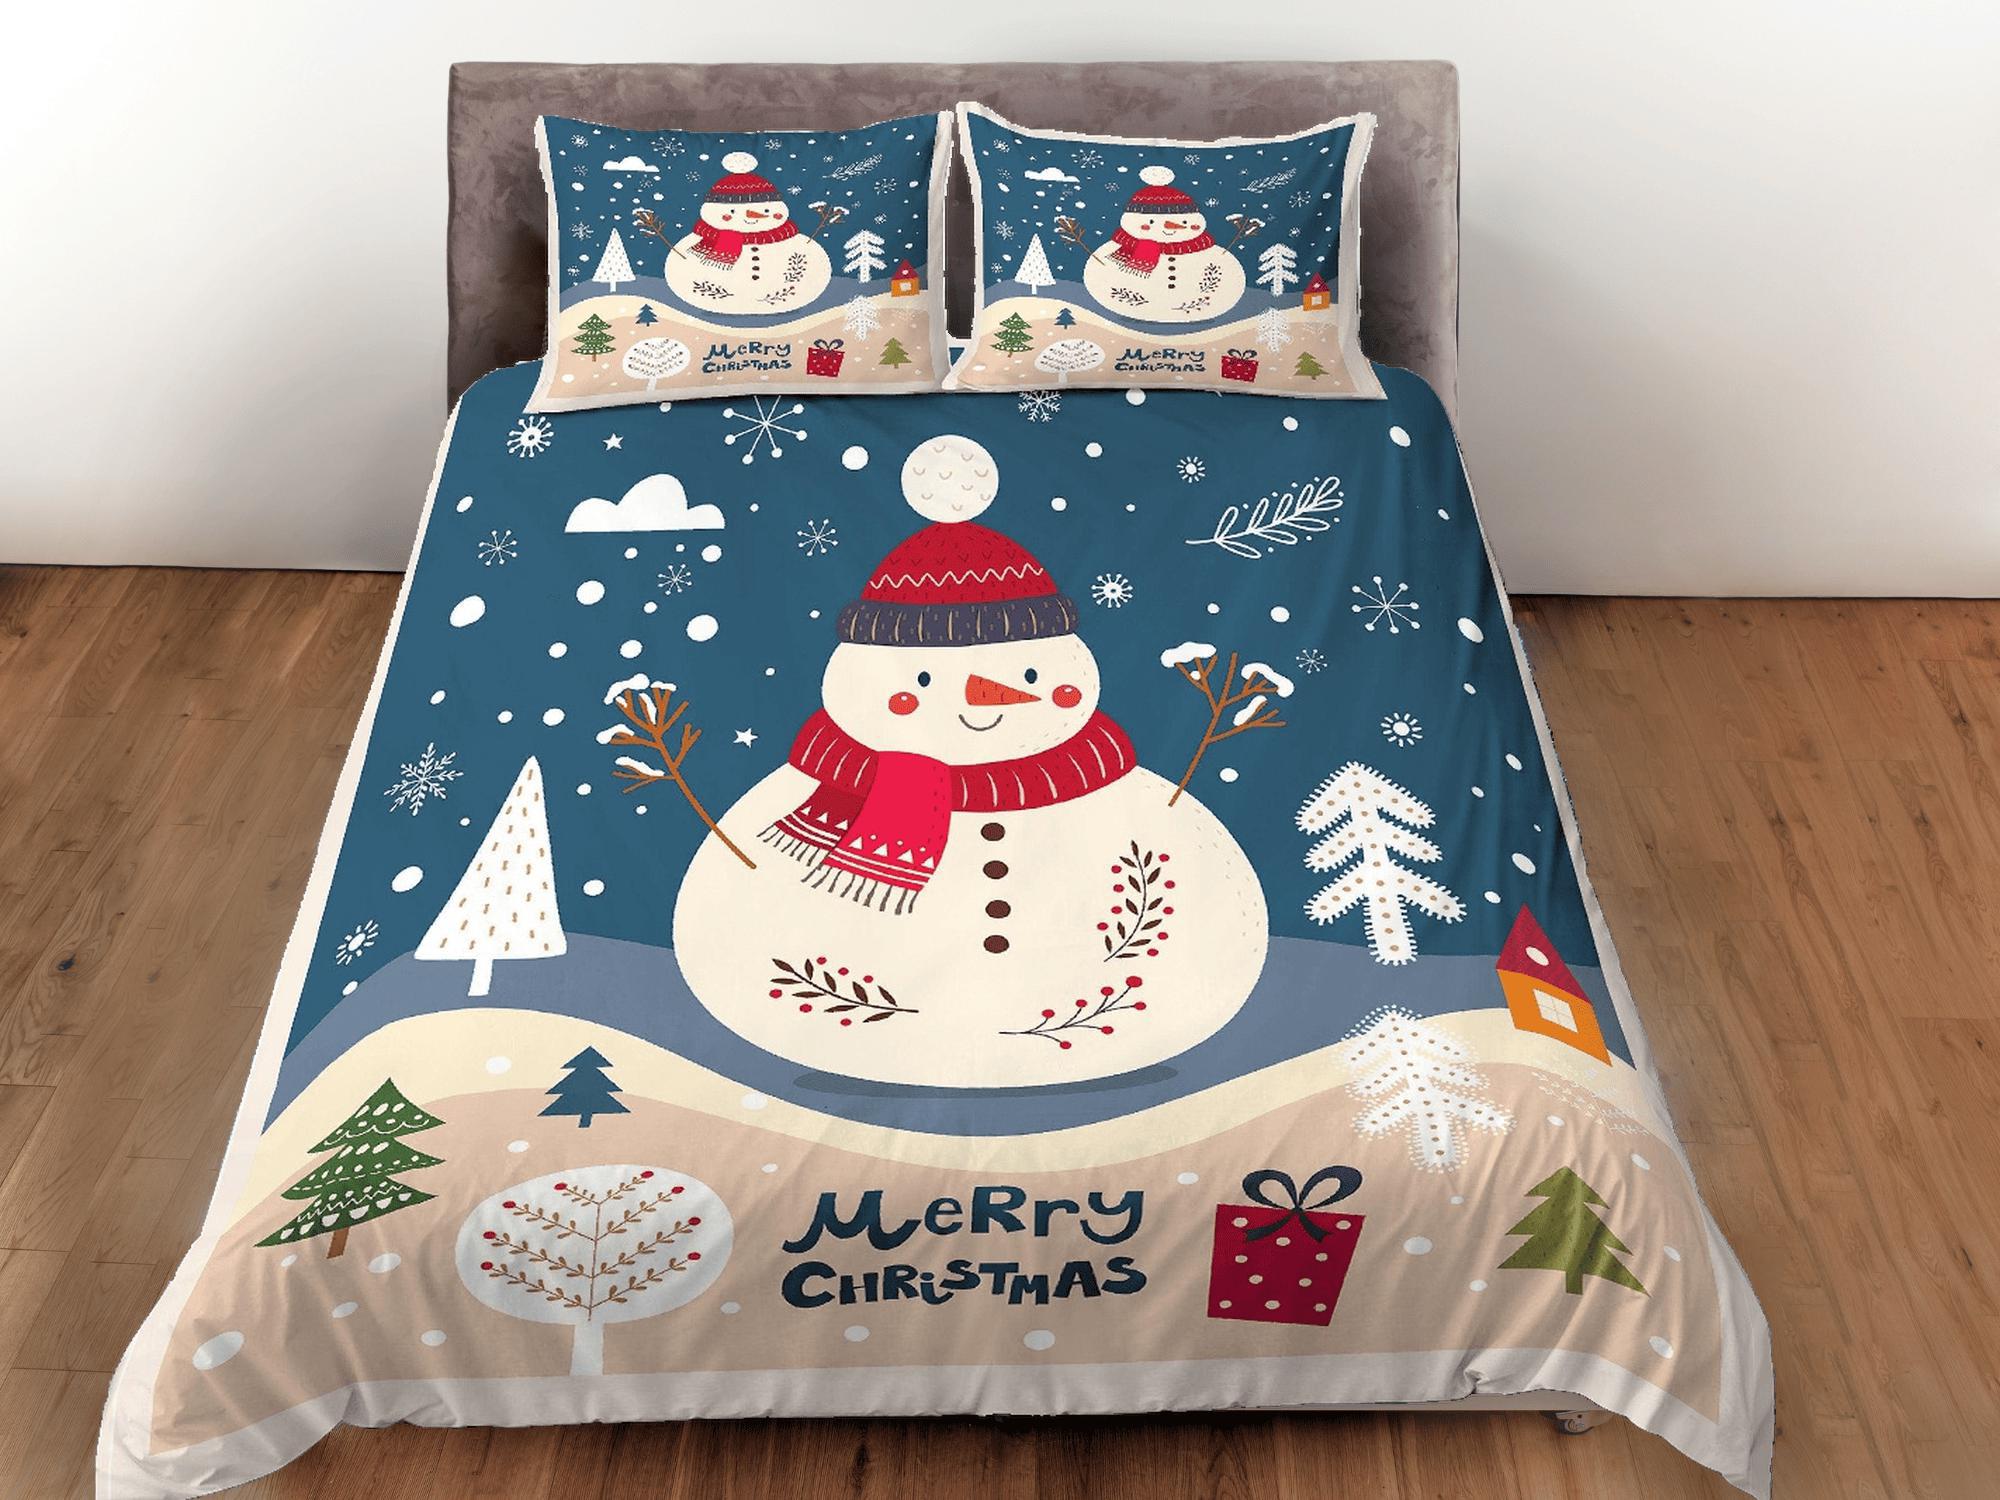 daintyduvet Christmas Duvet Cover Set with Pillows Snow Man Winter Dorm Bedding Comforter Cover Christmas Gift